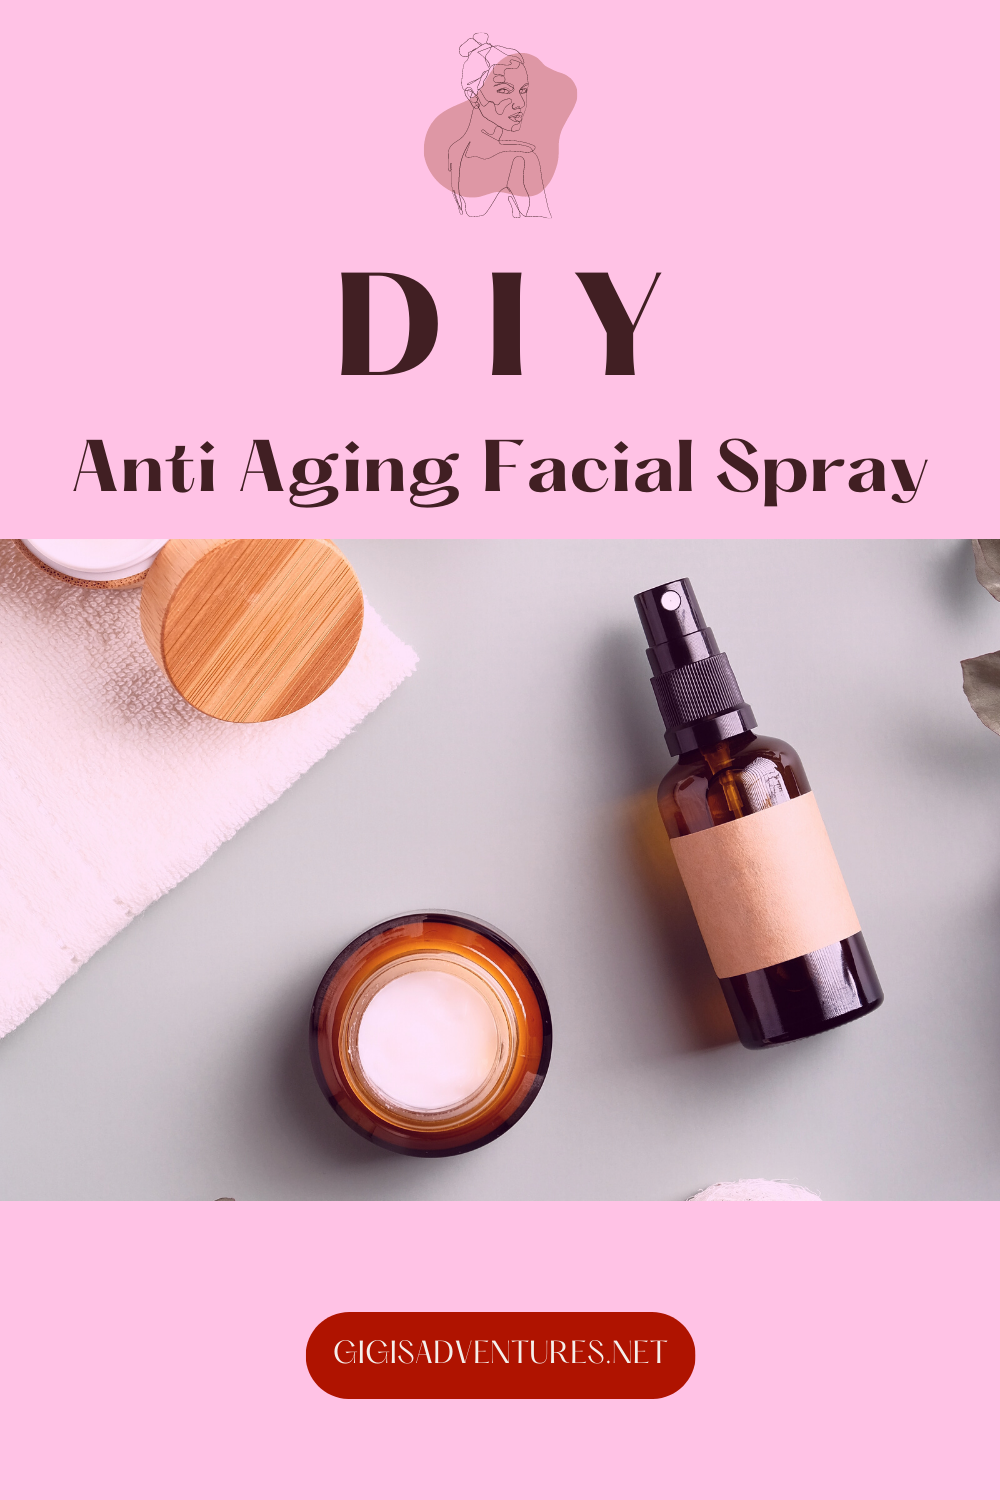 DIY Anti Aging Facial Spray - Super Hydrating and Cheap!